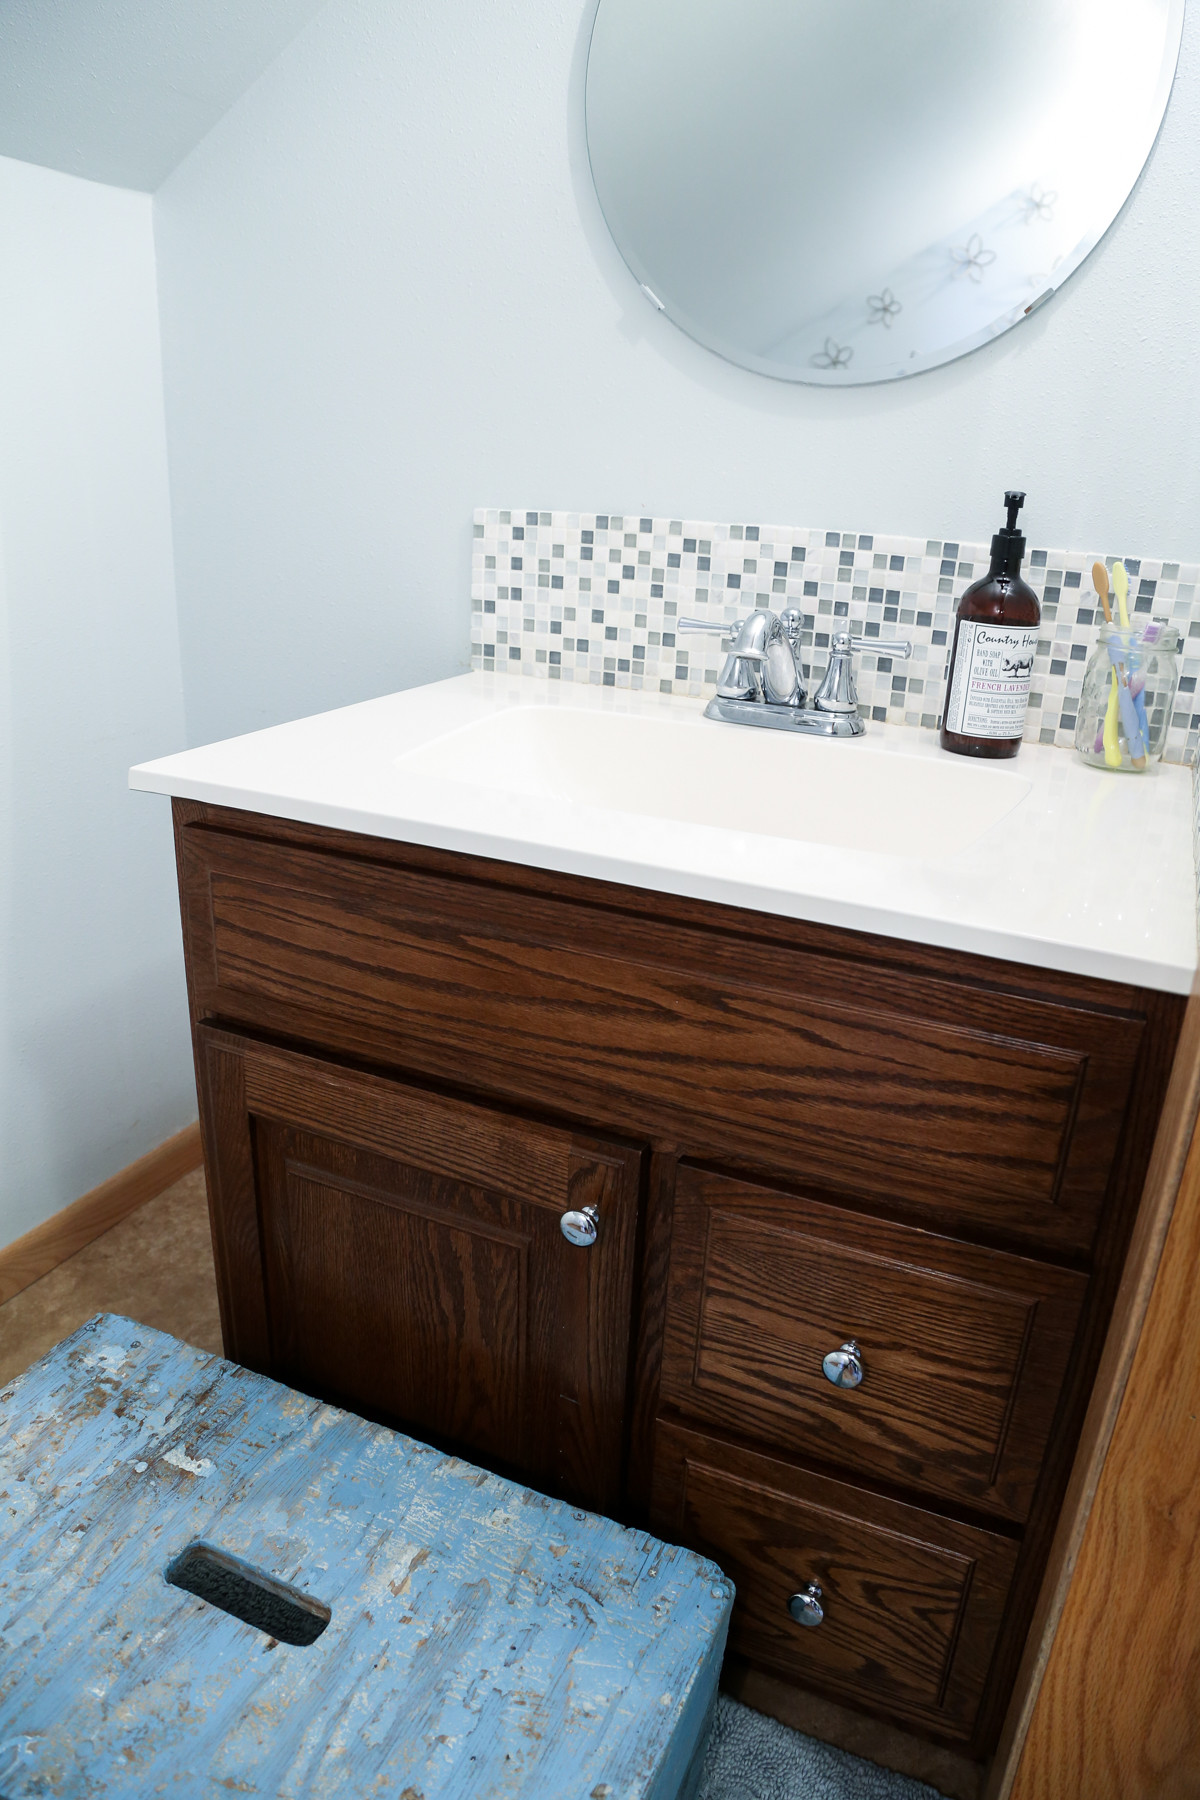 Best ideas about DIY Bathroom Backsplash
. Save or Pin Updated Bathroom Tile Backsplash DIY With Paint Now.